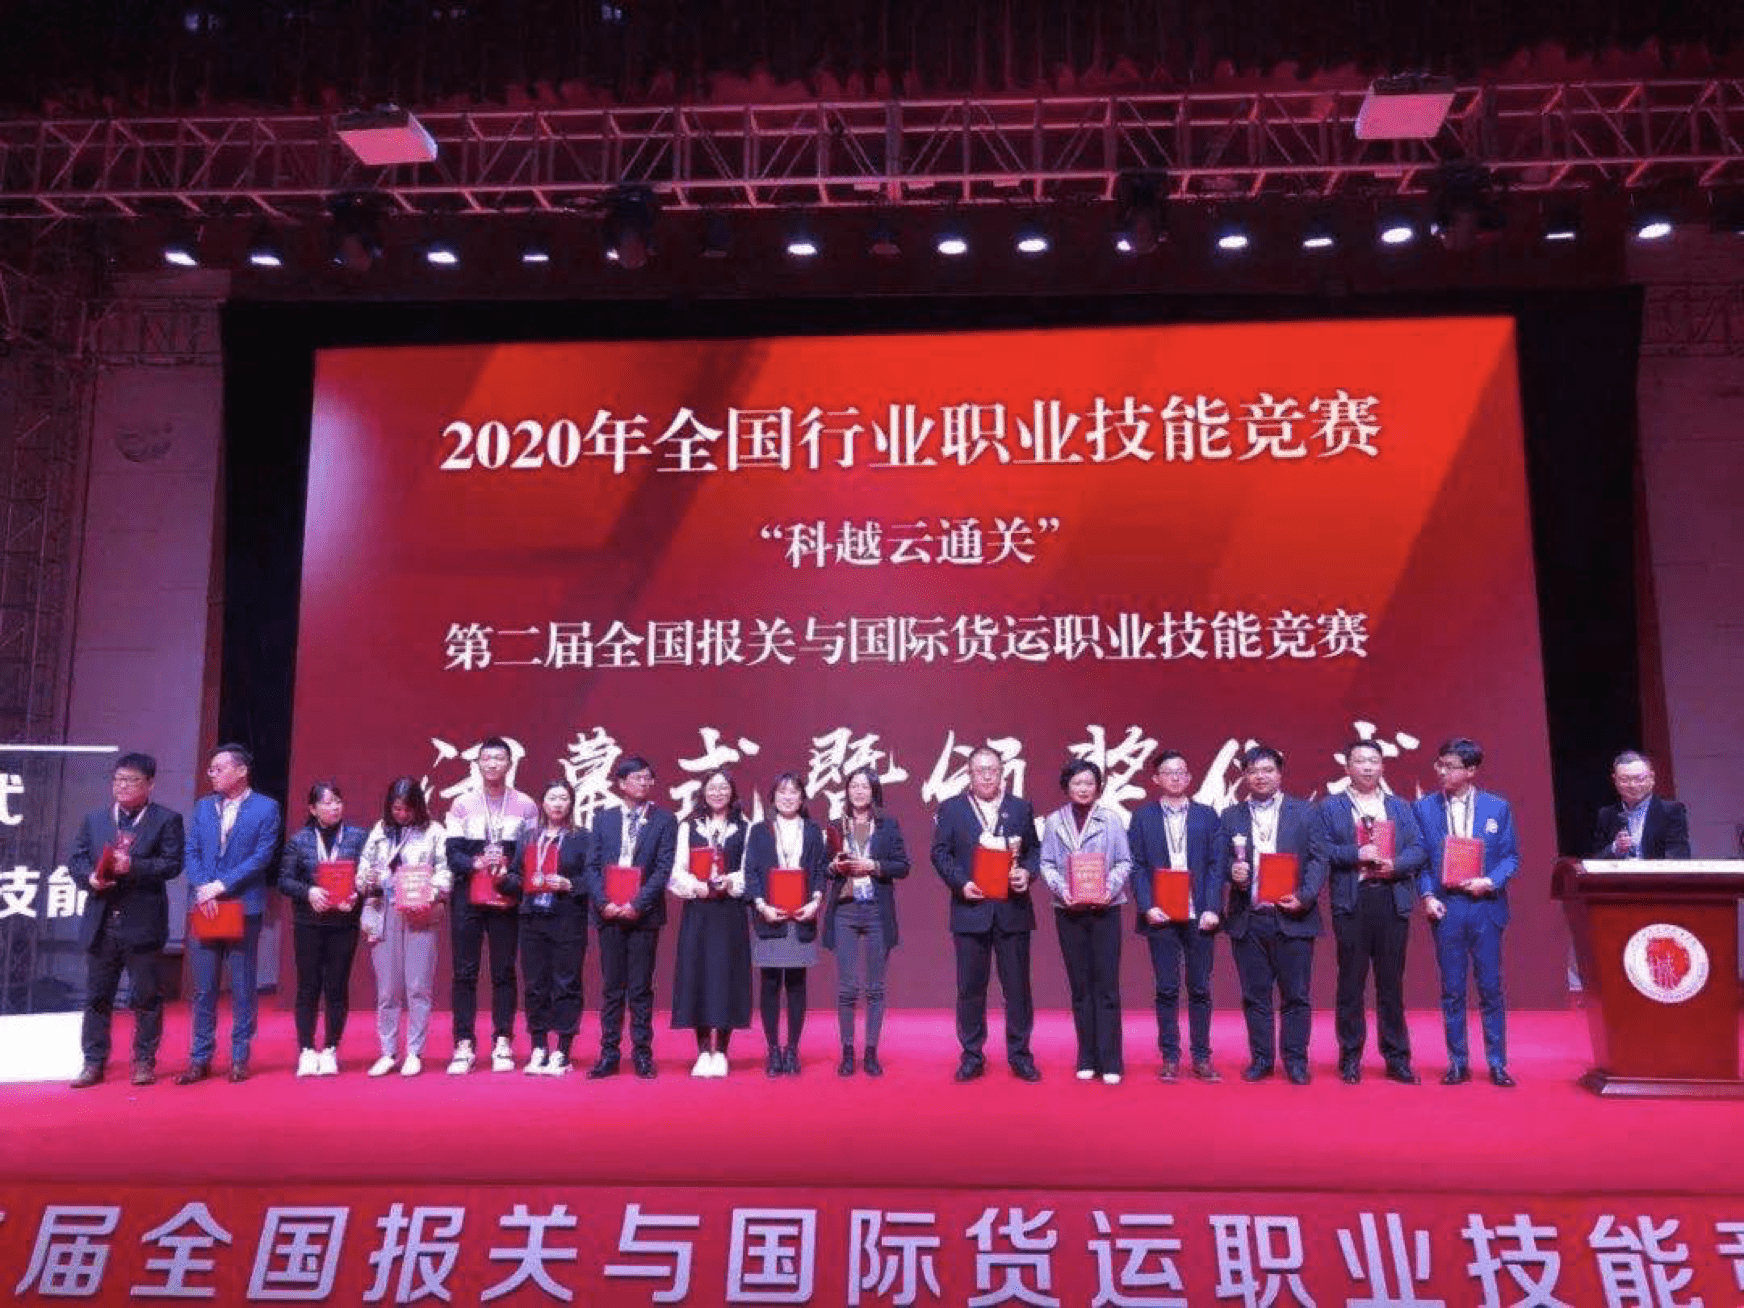 2020 National Industry Vocational Skills Competition“ var haldin af CCBA & Oujian Group í Chongqing